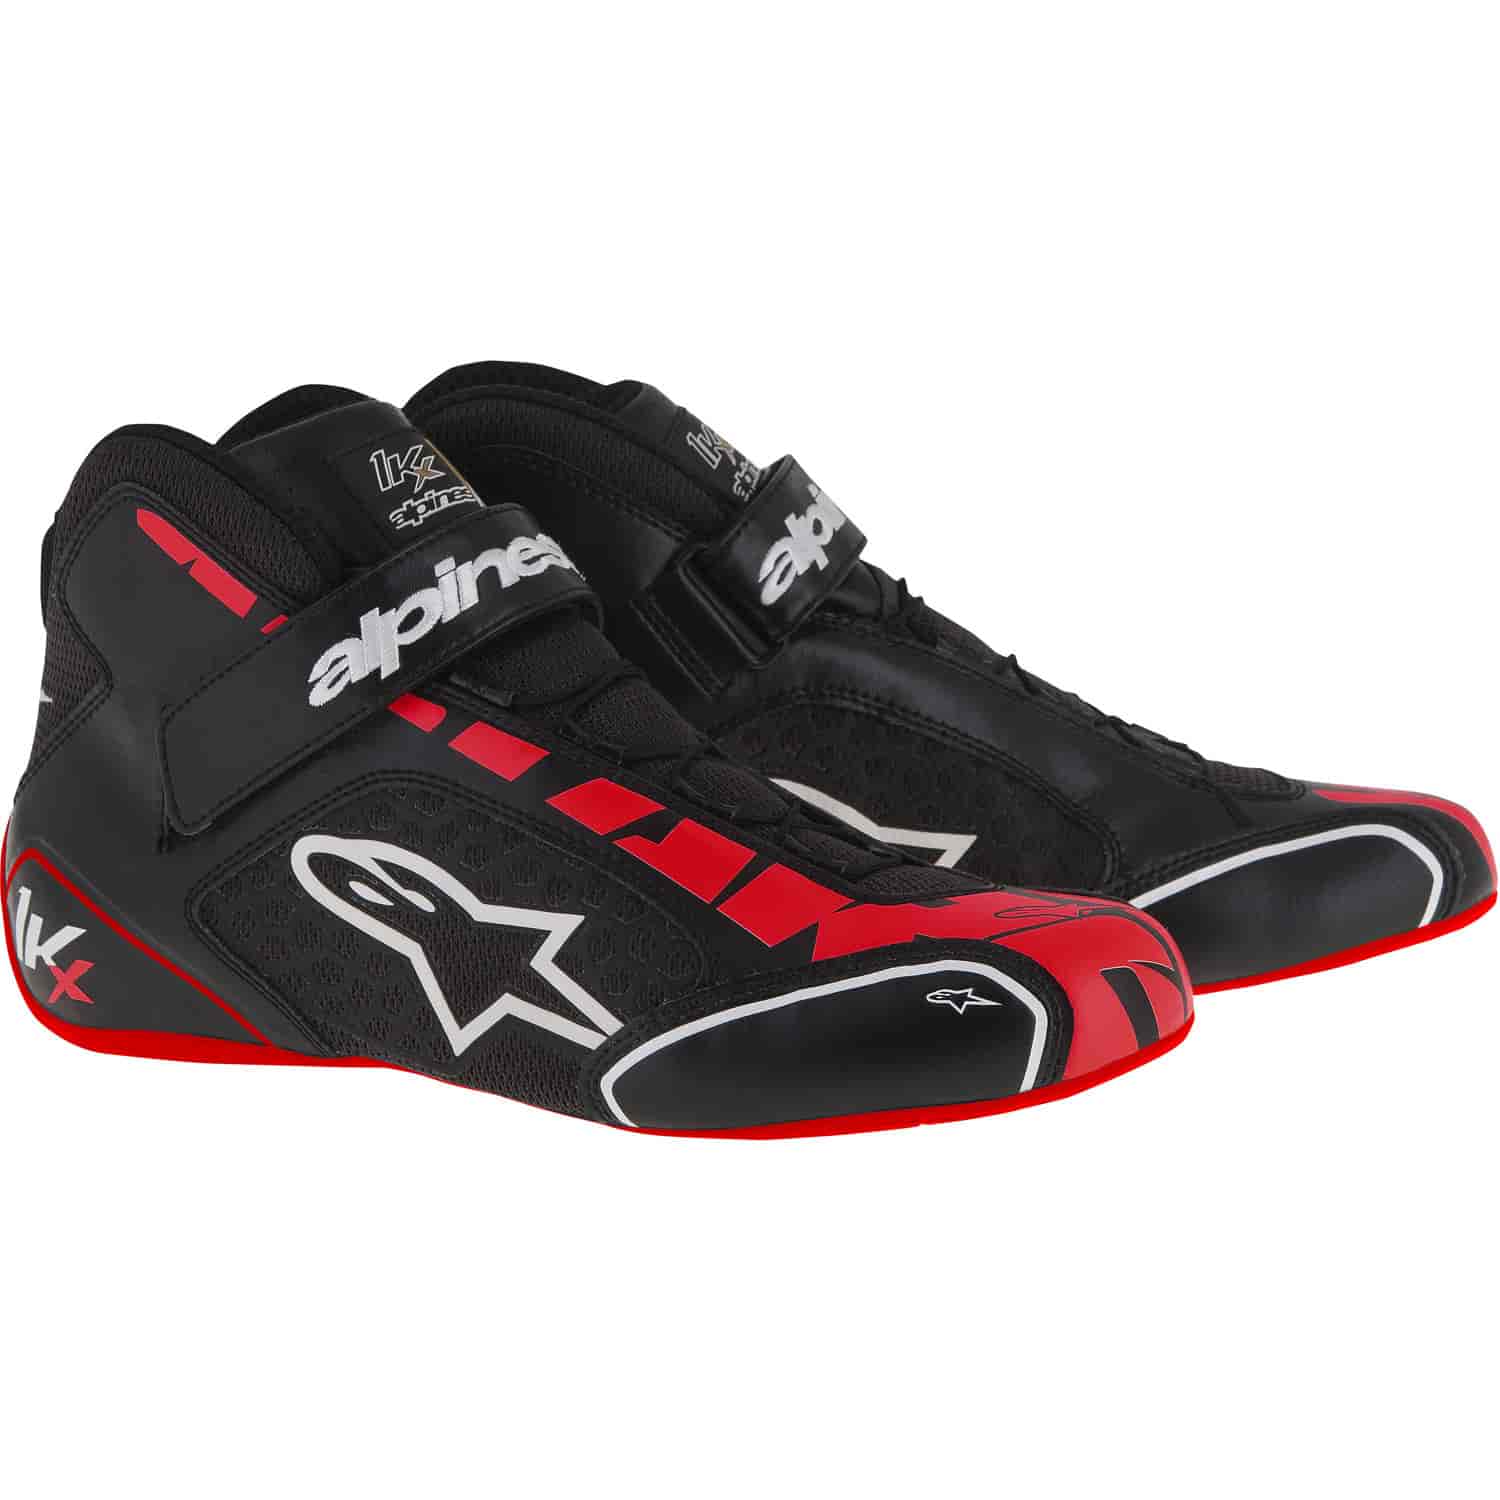 Tech 1-KX Shoes Black/Red